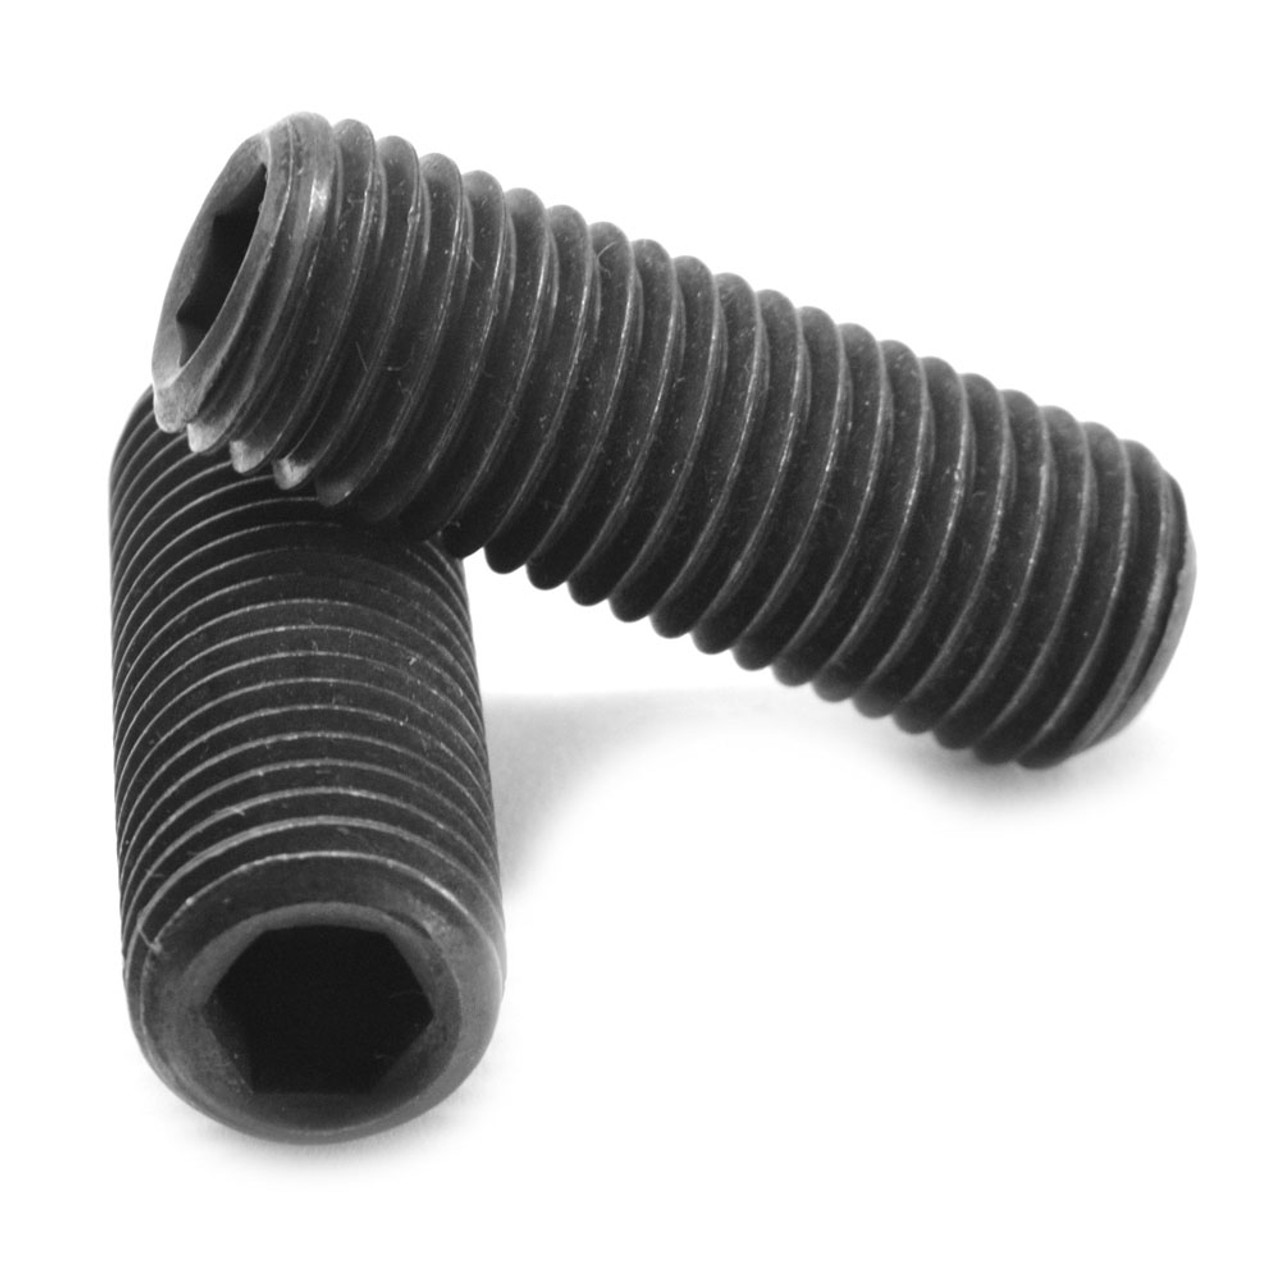 M12 x 1.75 x 60 MM Coarse Thread ISO 4029 / DIN 916 Class 45H Socket Set Screw Cup Point Alloy Steel Black Oxide